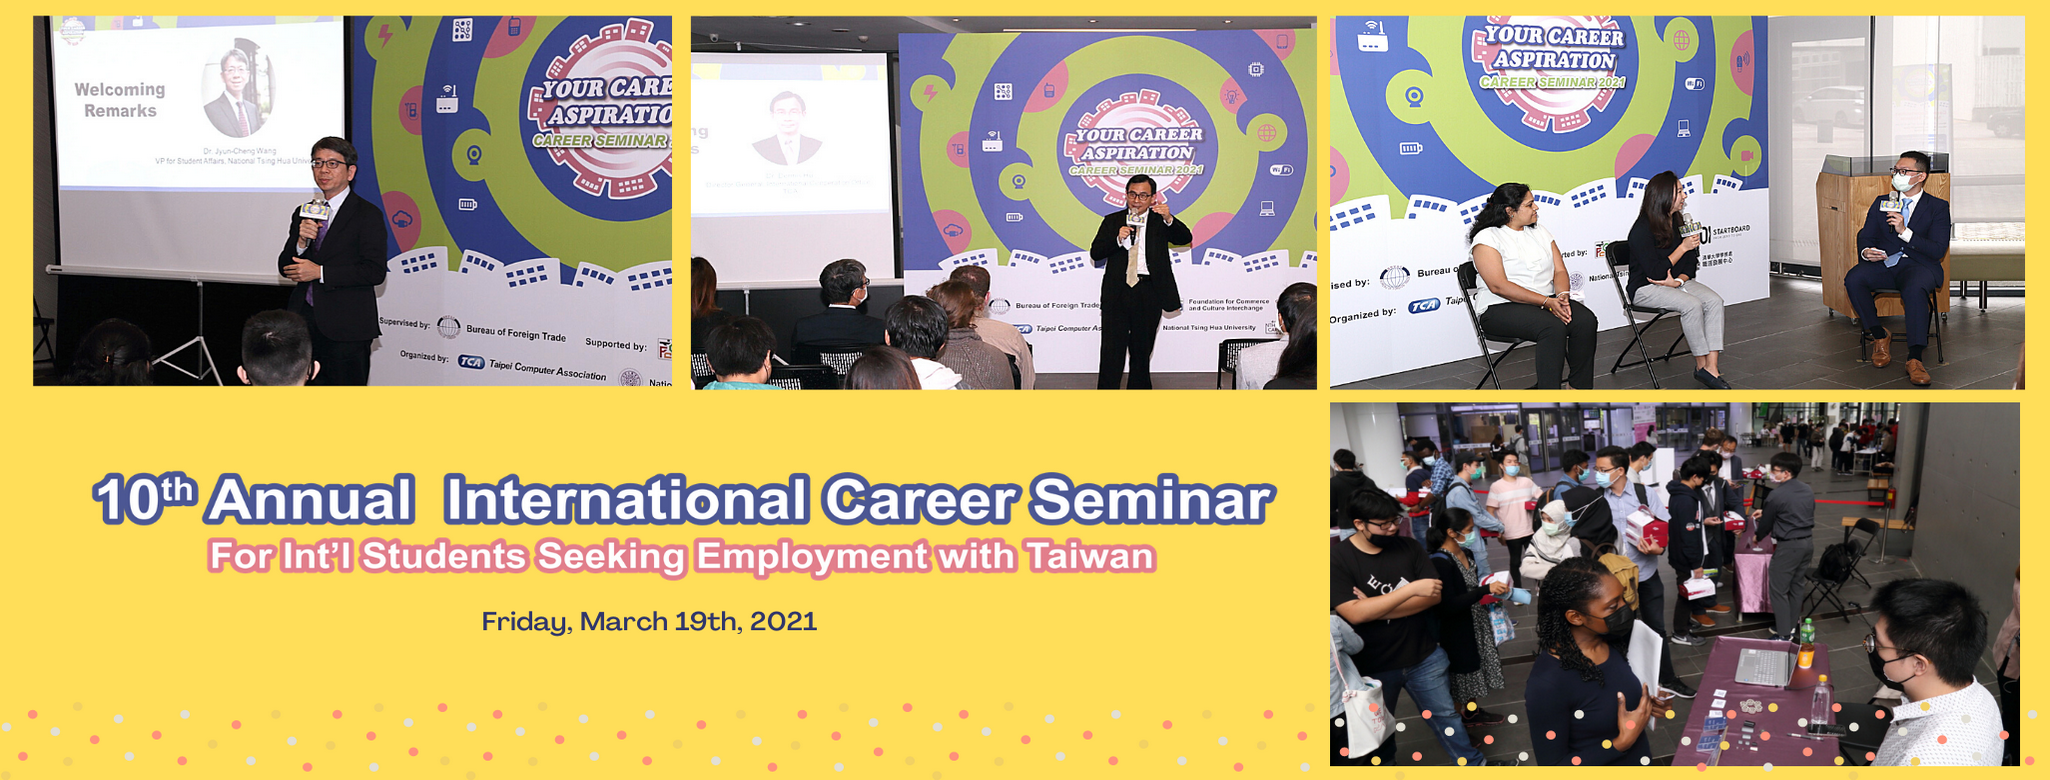 【Career Seminar 2021】 For Int'l Talents Seeking Employment with Taiwan!